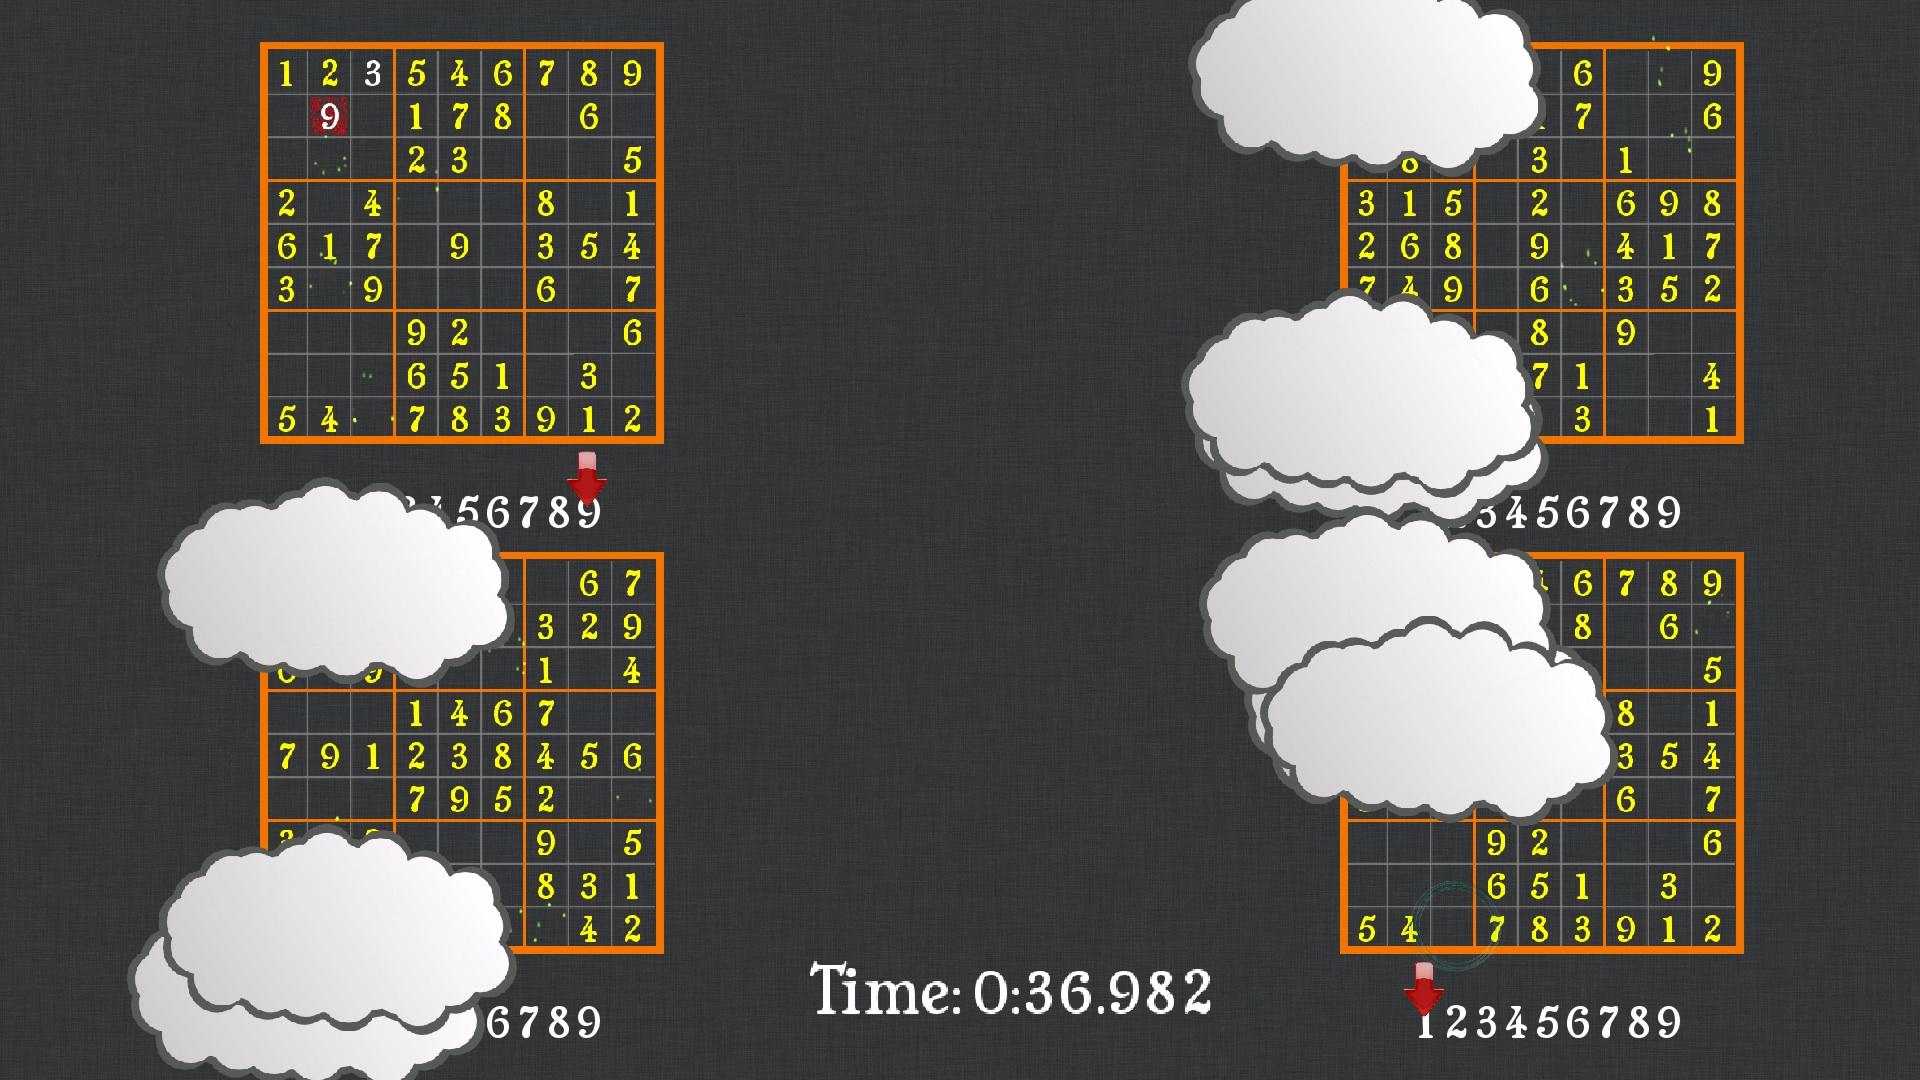 Screenshot of Battle Sudoku